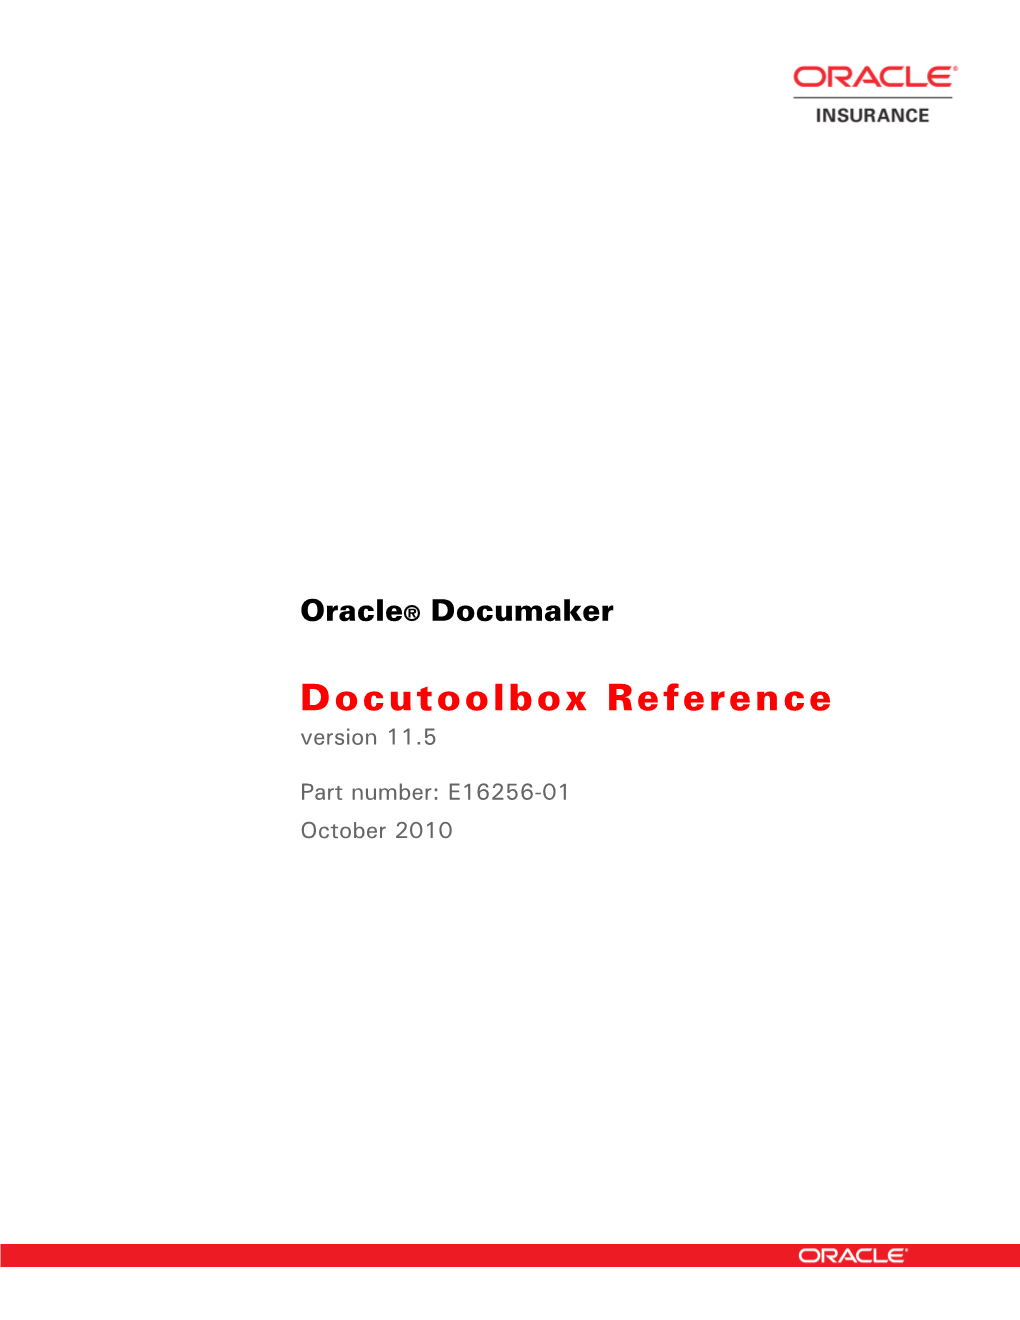 Docutoolbox Reference Version 11.5